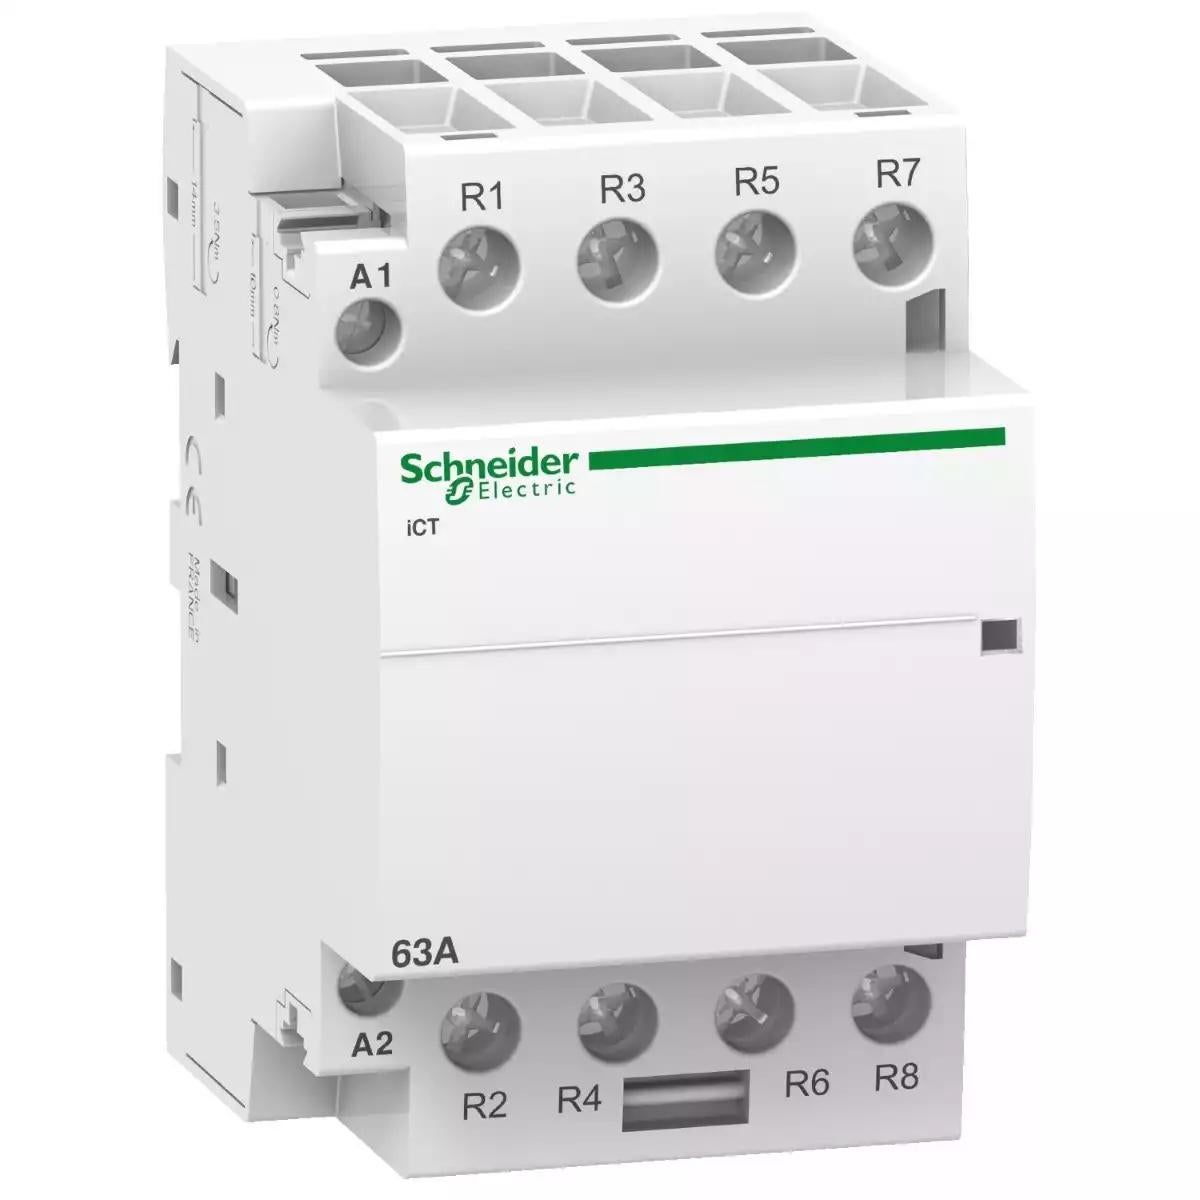 Schneider Electric Acti 9 iCT 63A 4NC 220...240V 50Hz contactor